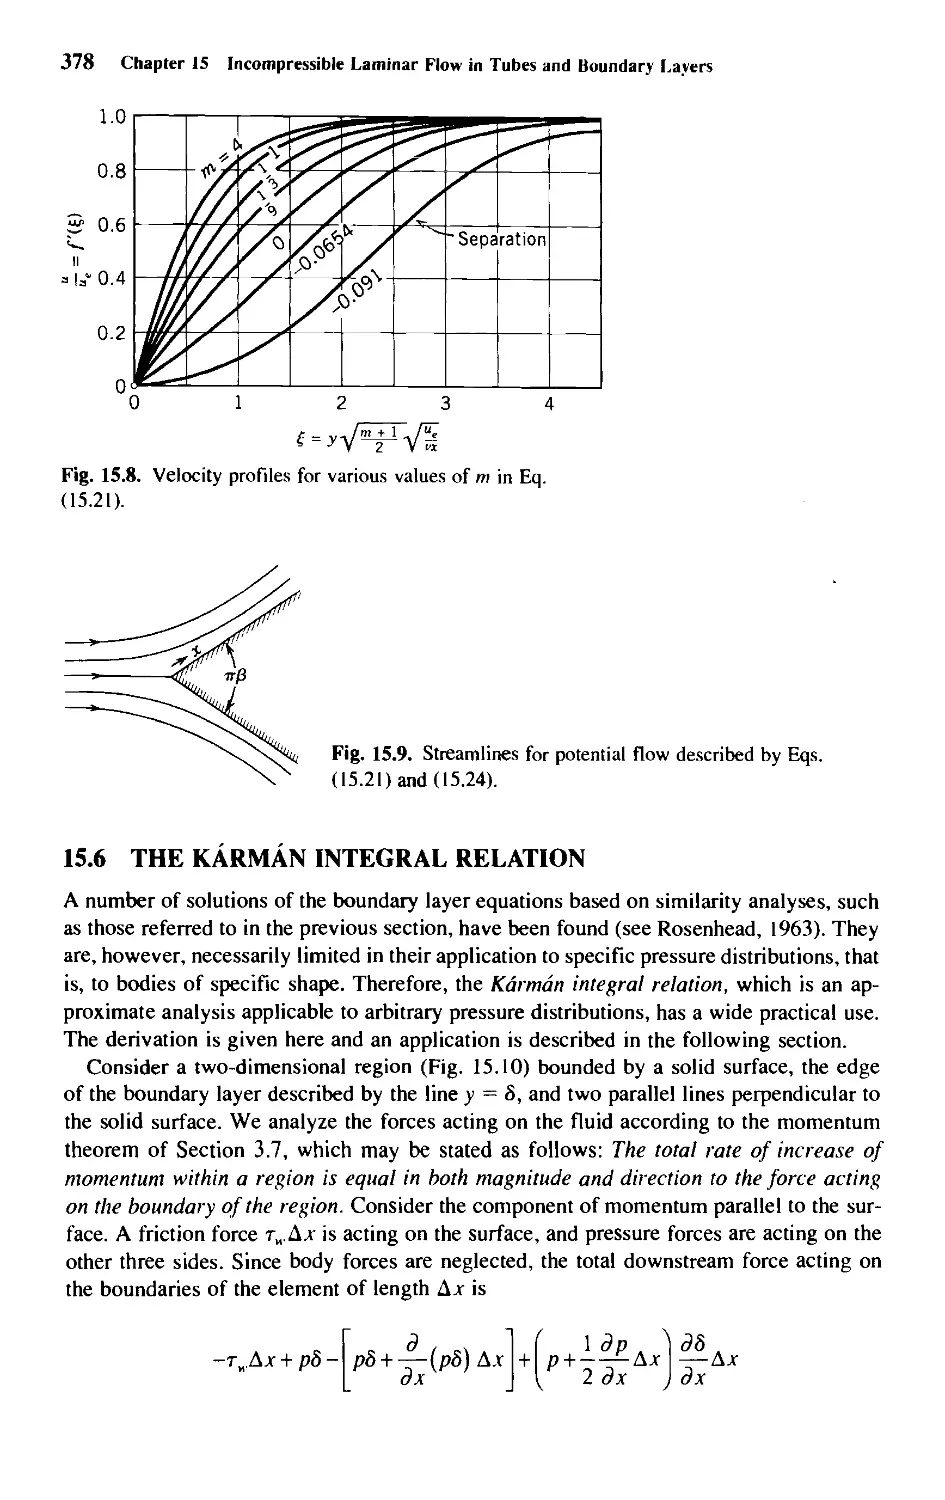 15.6 - The Karman Integral Relation